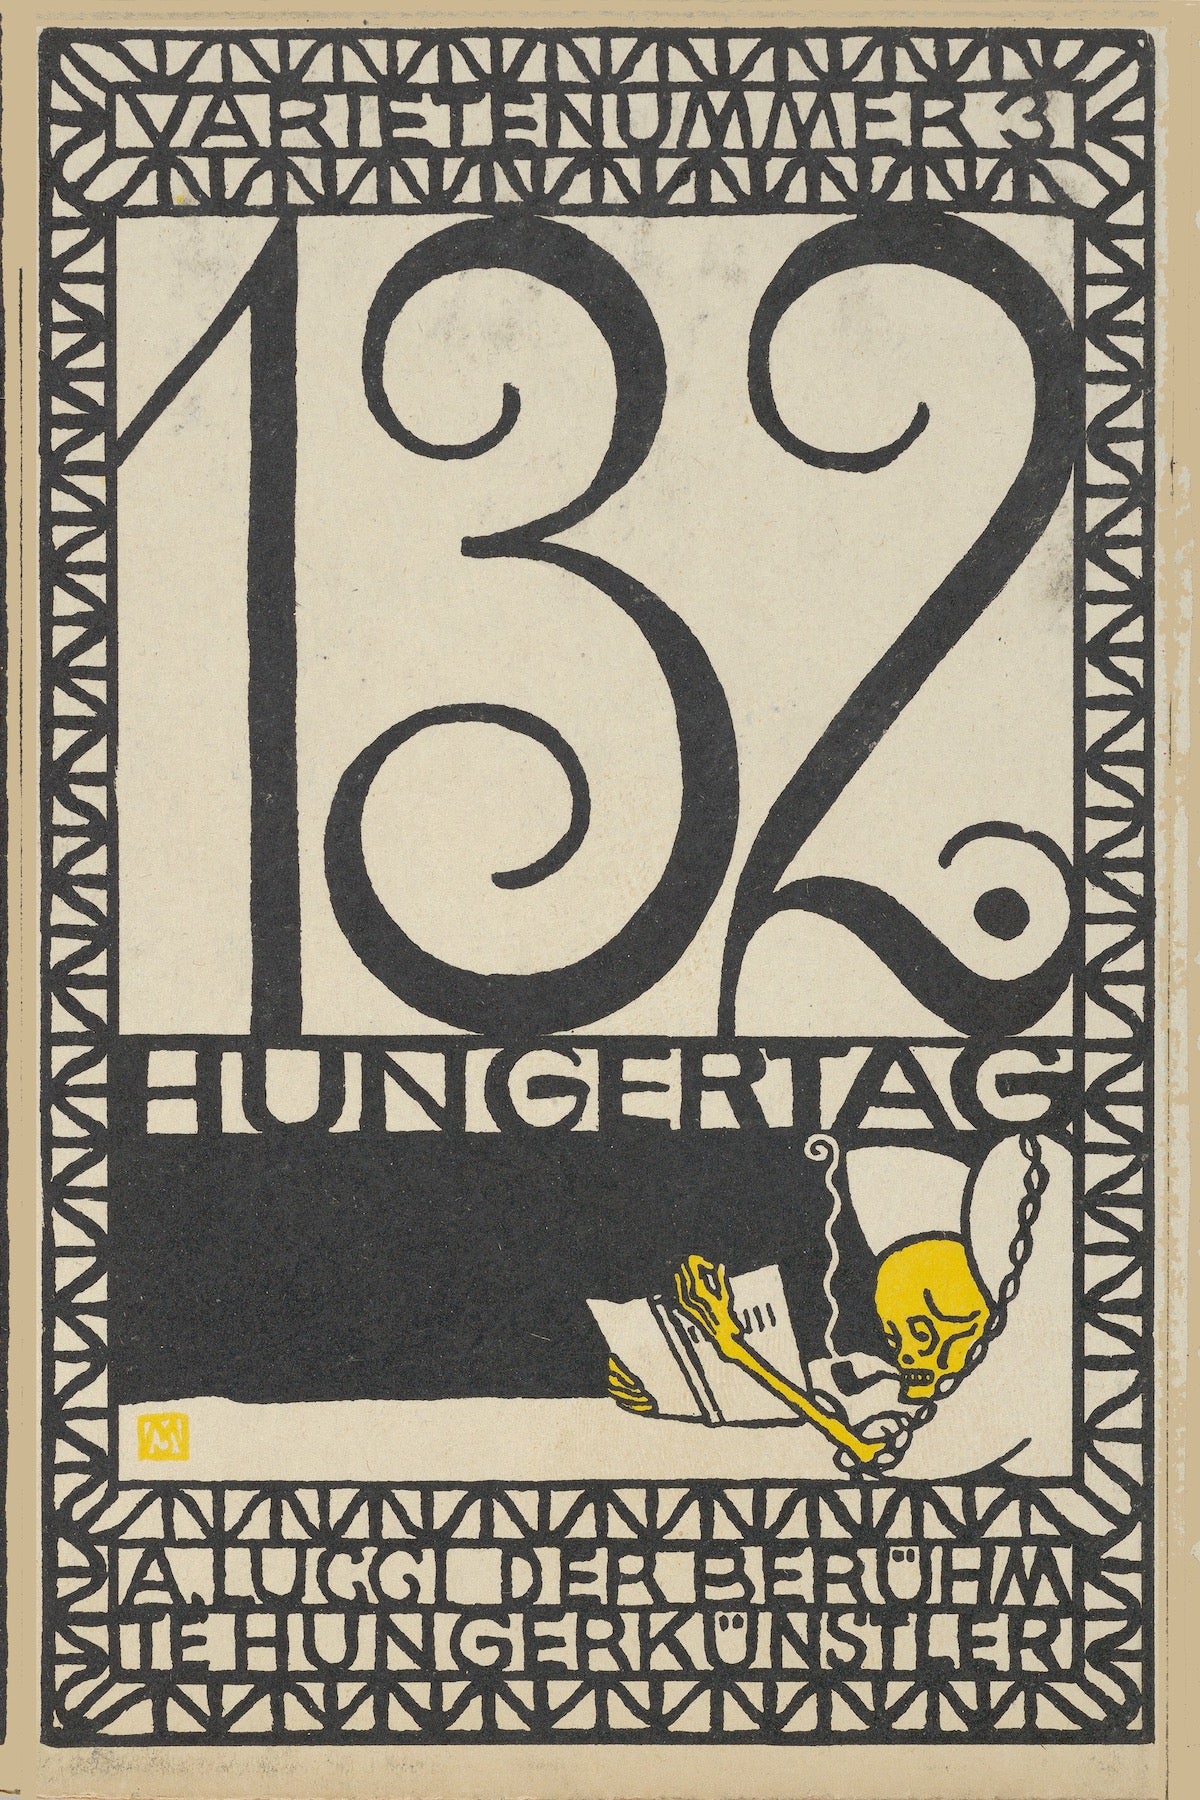 Variety Act 3 - 132nd Day of Fasting, A. Lucci the Famous Hunger Artist (Varietenummer 3- 132 Hungertag, A. Lucci der Berühmte Hungerkünstler) by Moriz Jung, 1907 - Postcard